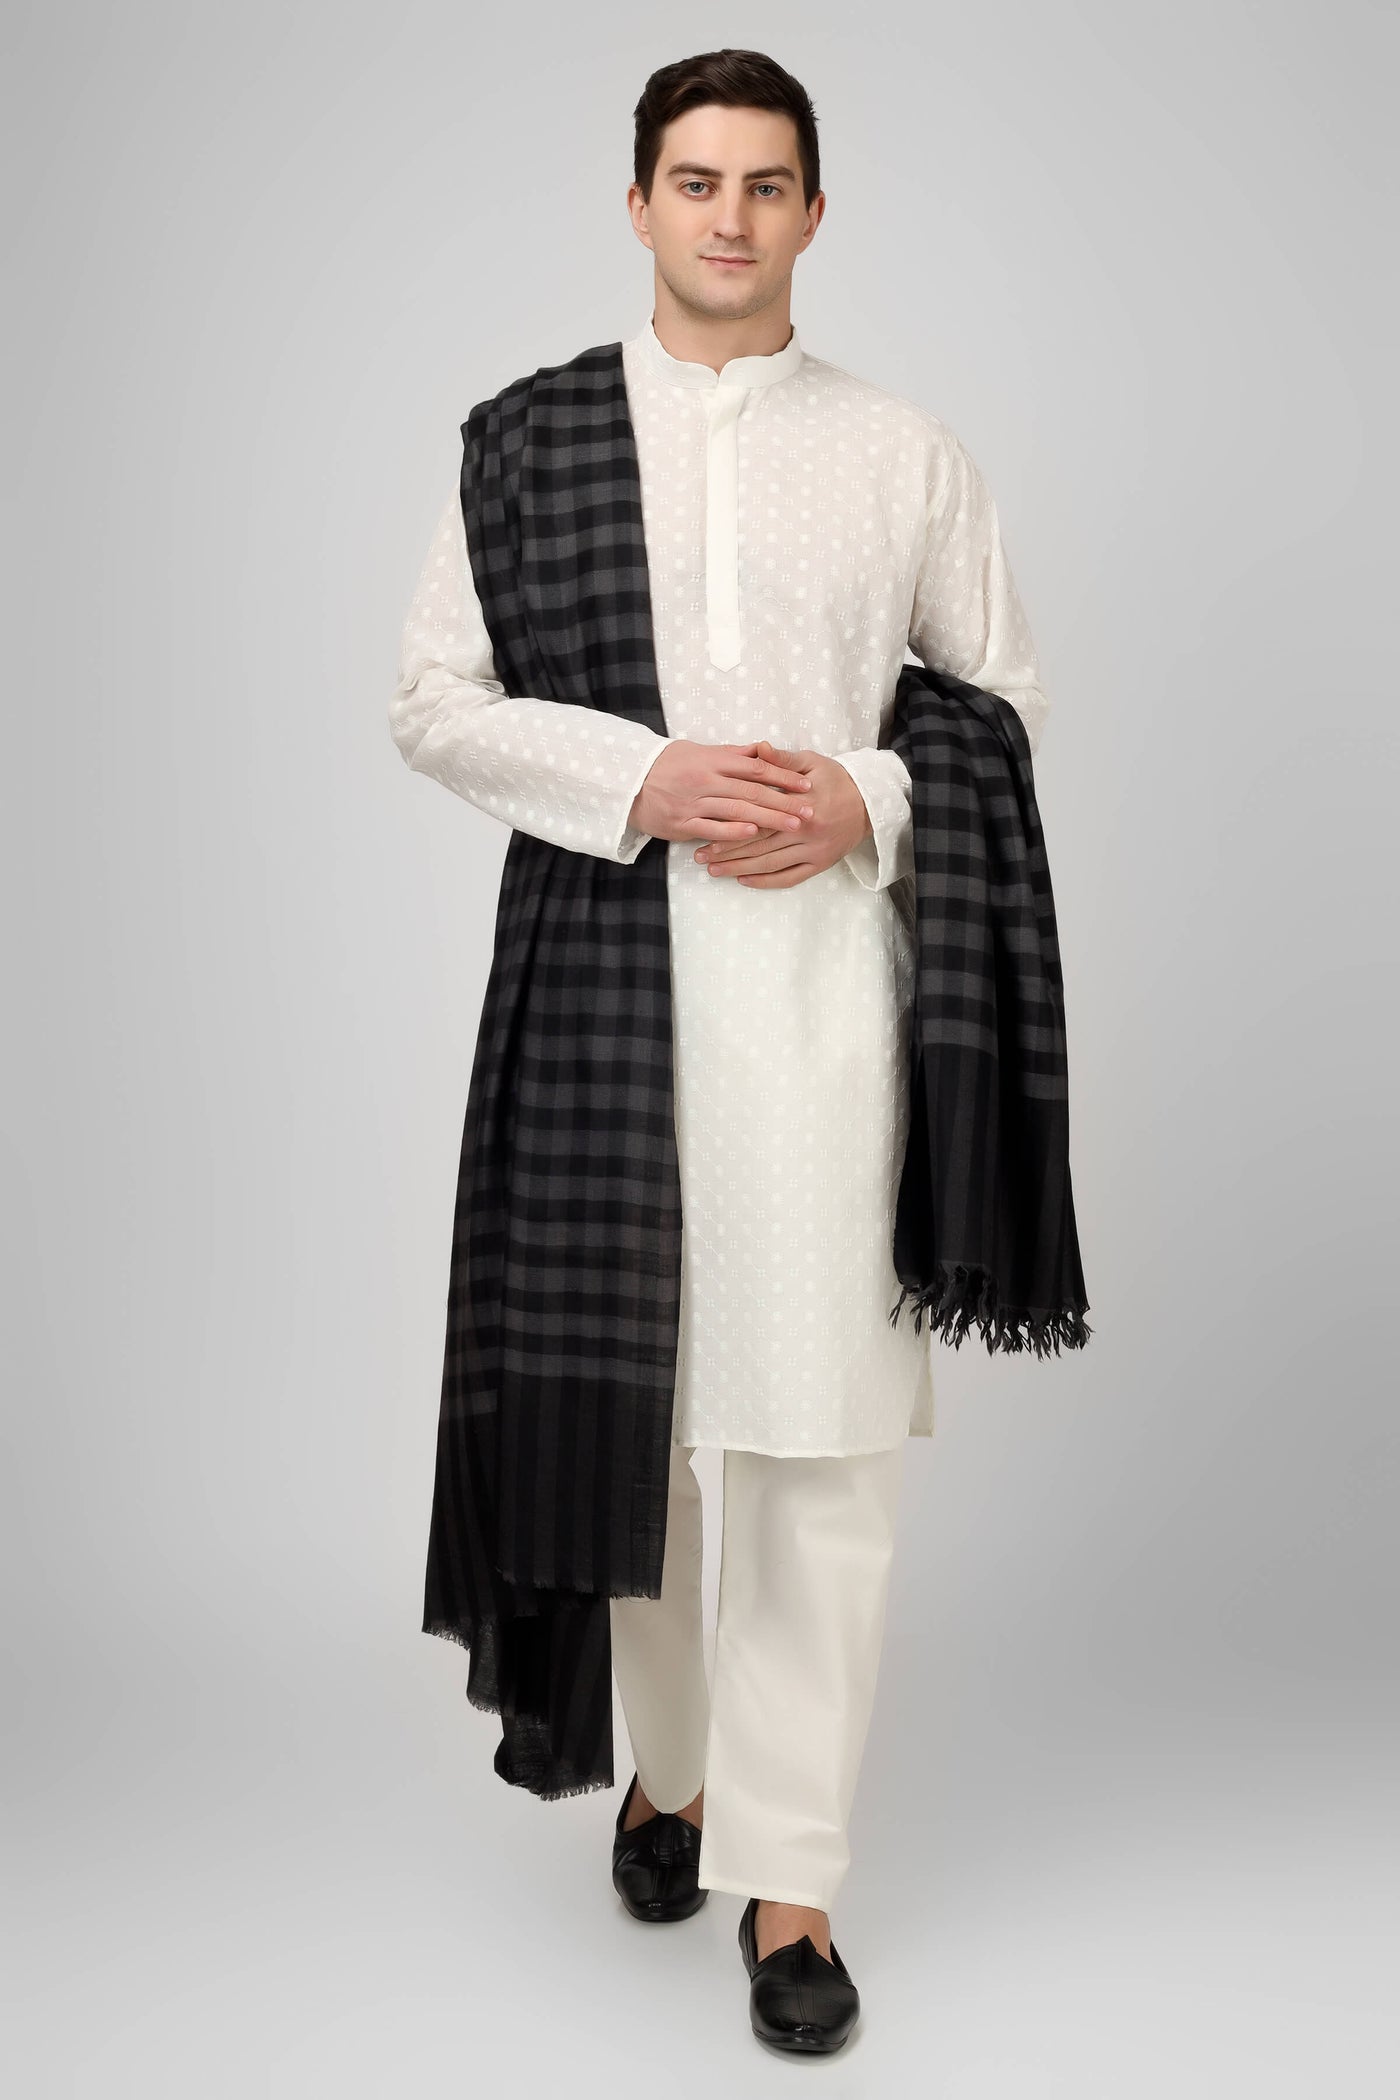 PASHMINA - Black and gray Mens Pashmina  shawl checked design